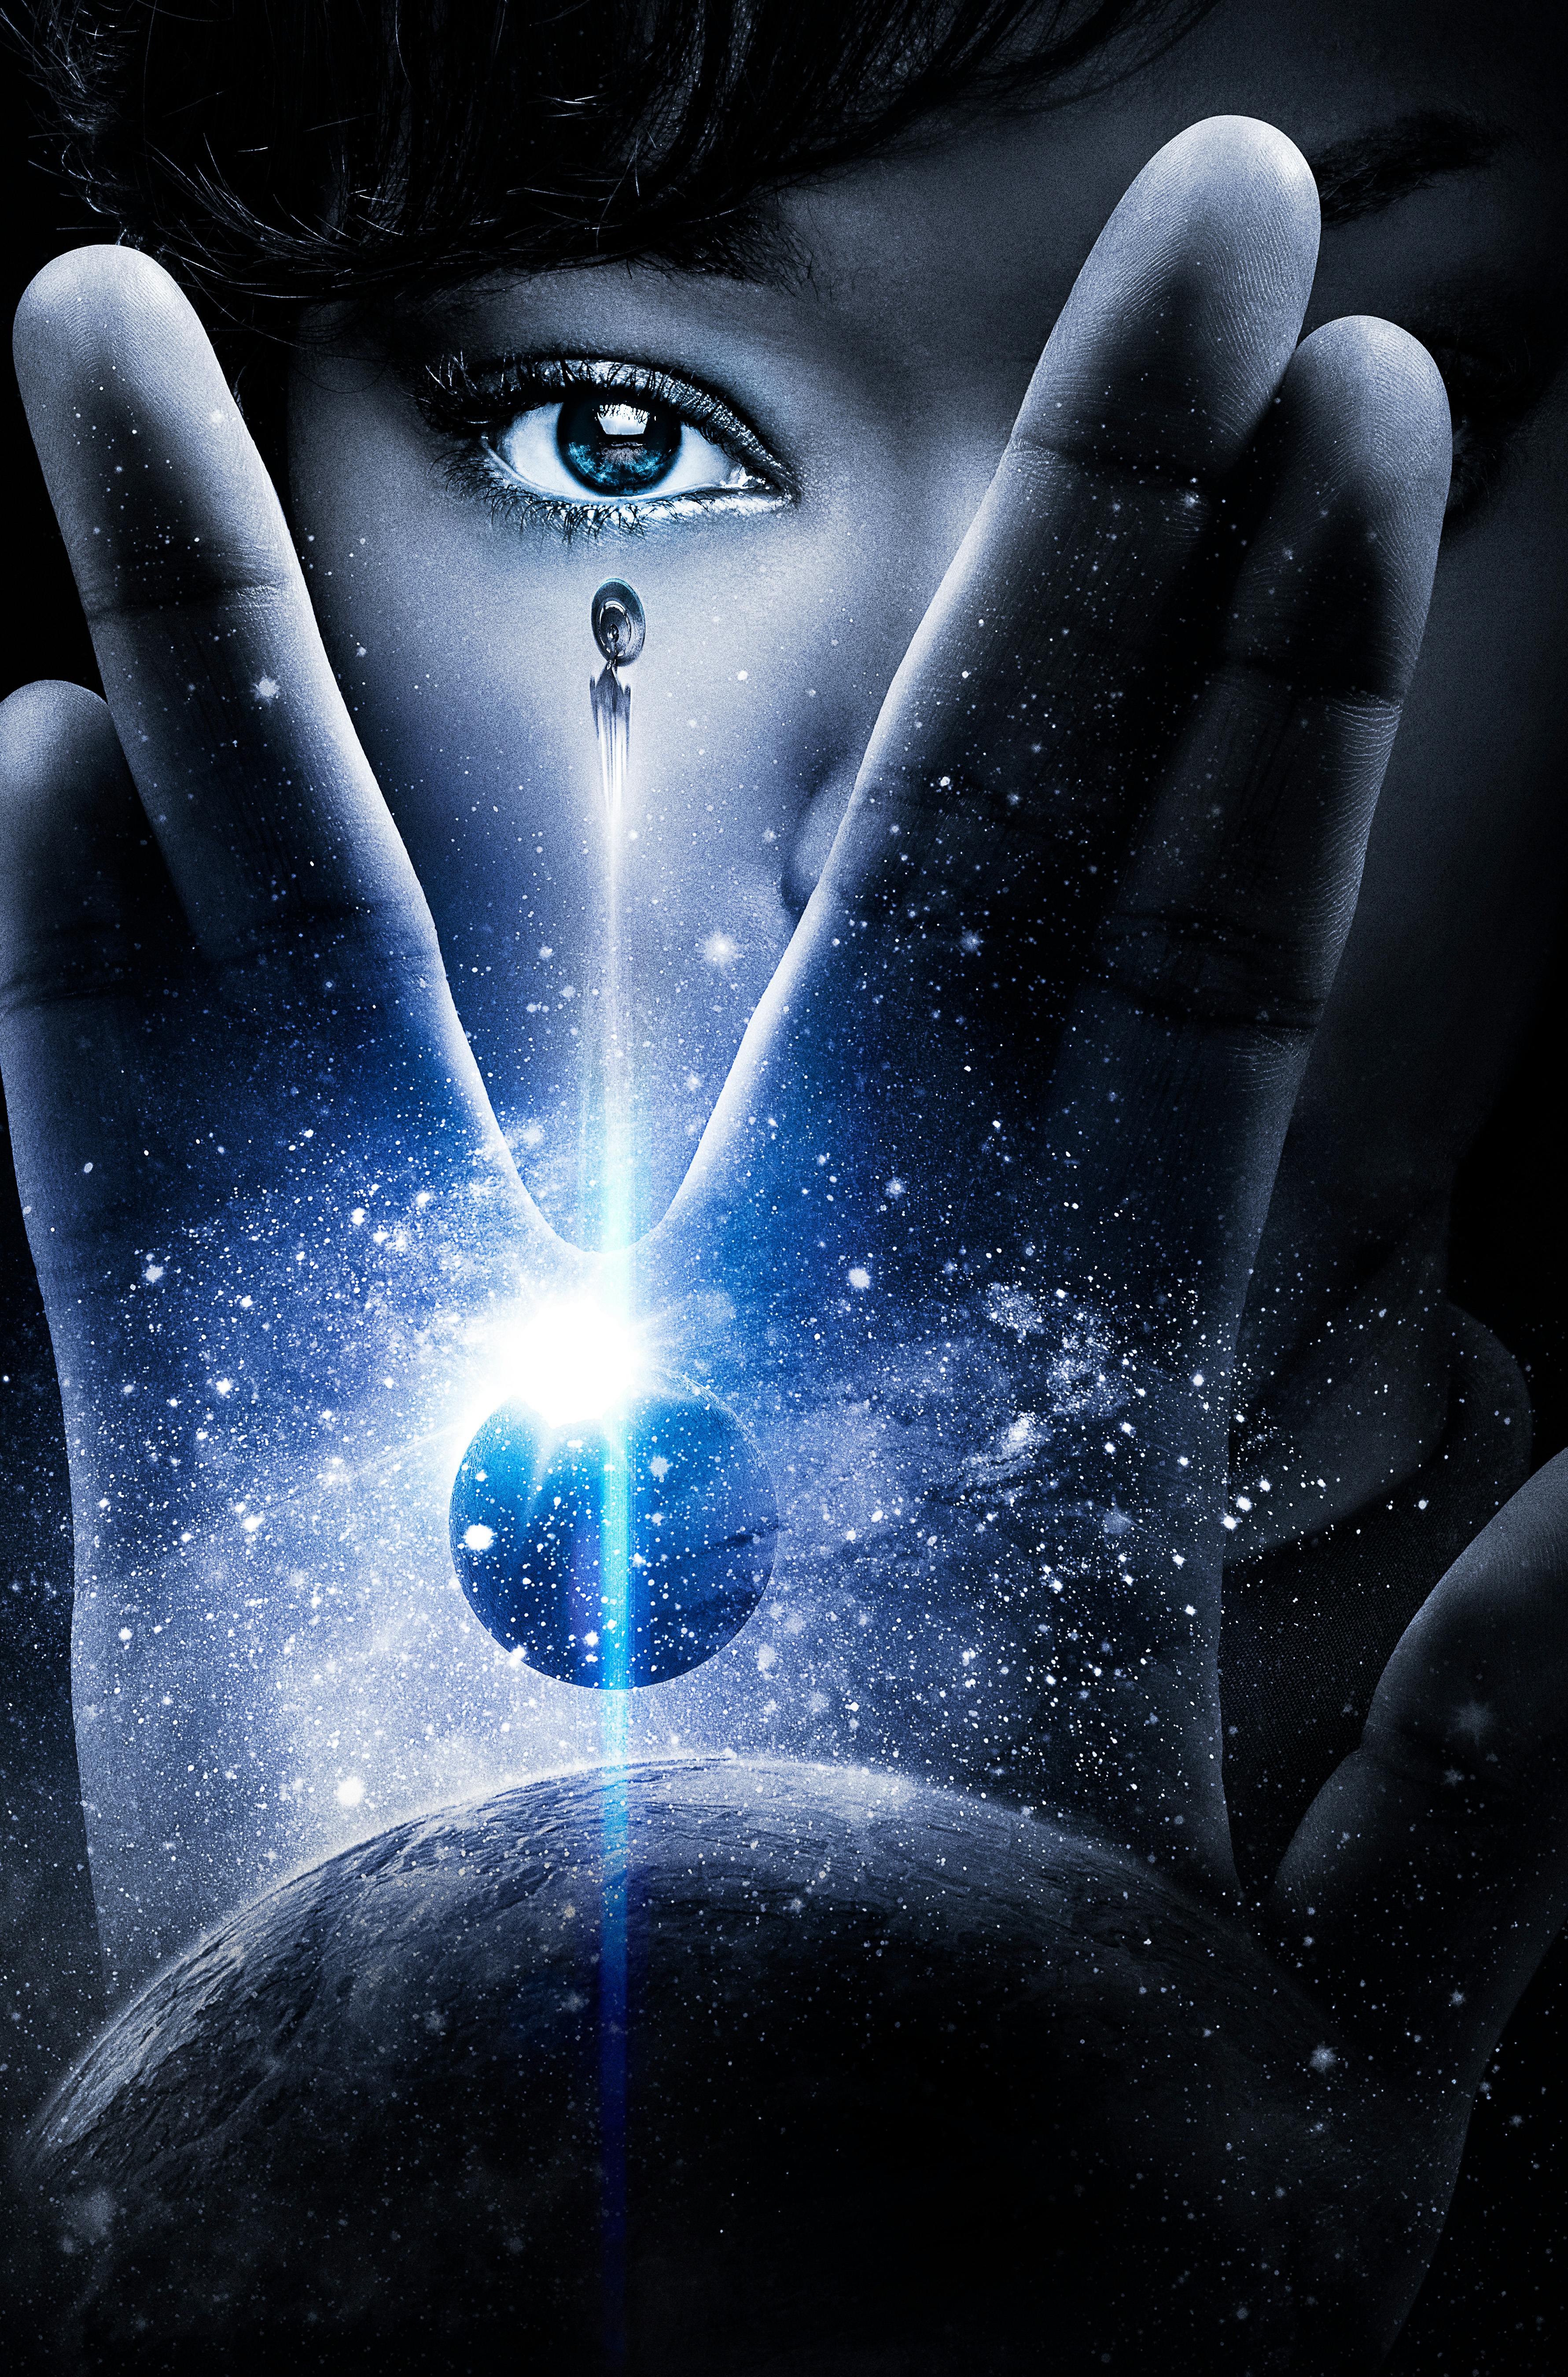 Star Trek: Discovery Season 1 key art poster